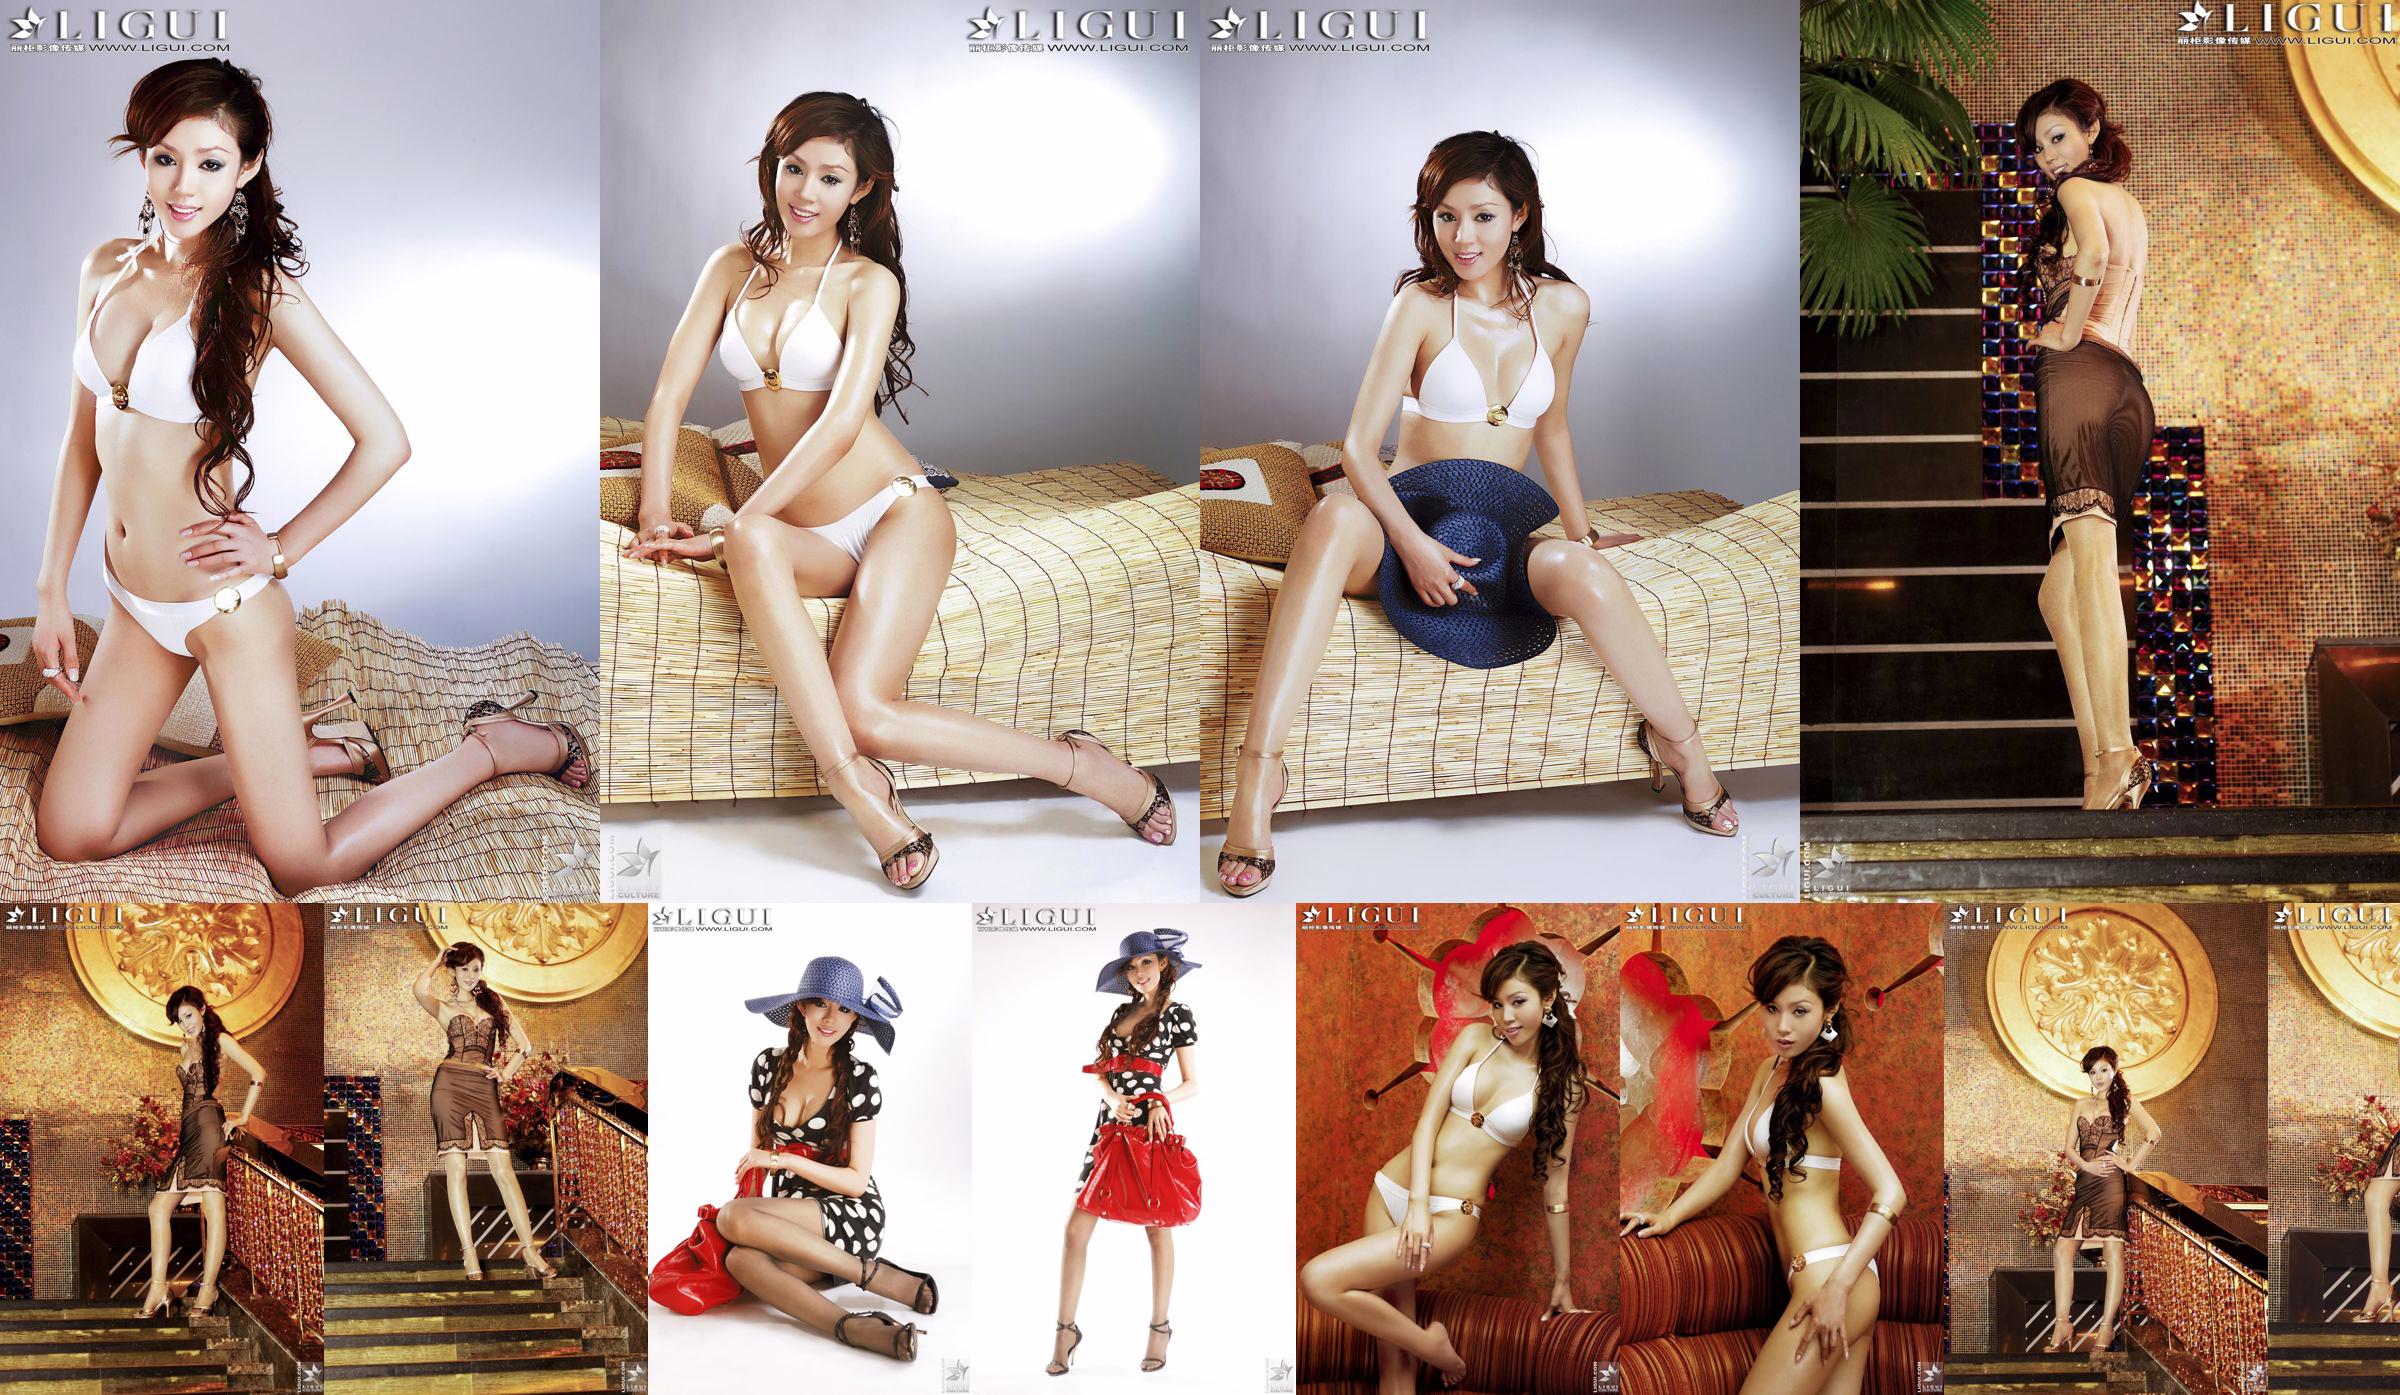 [丽 柜 LiGui] Model Yao Jinjin's "Bikini + Jurk" Mooie benen en zijdeachtige voeten Foto Foto No.2ee0d7 Pagina 23